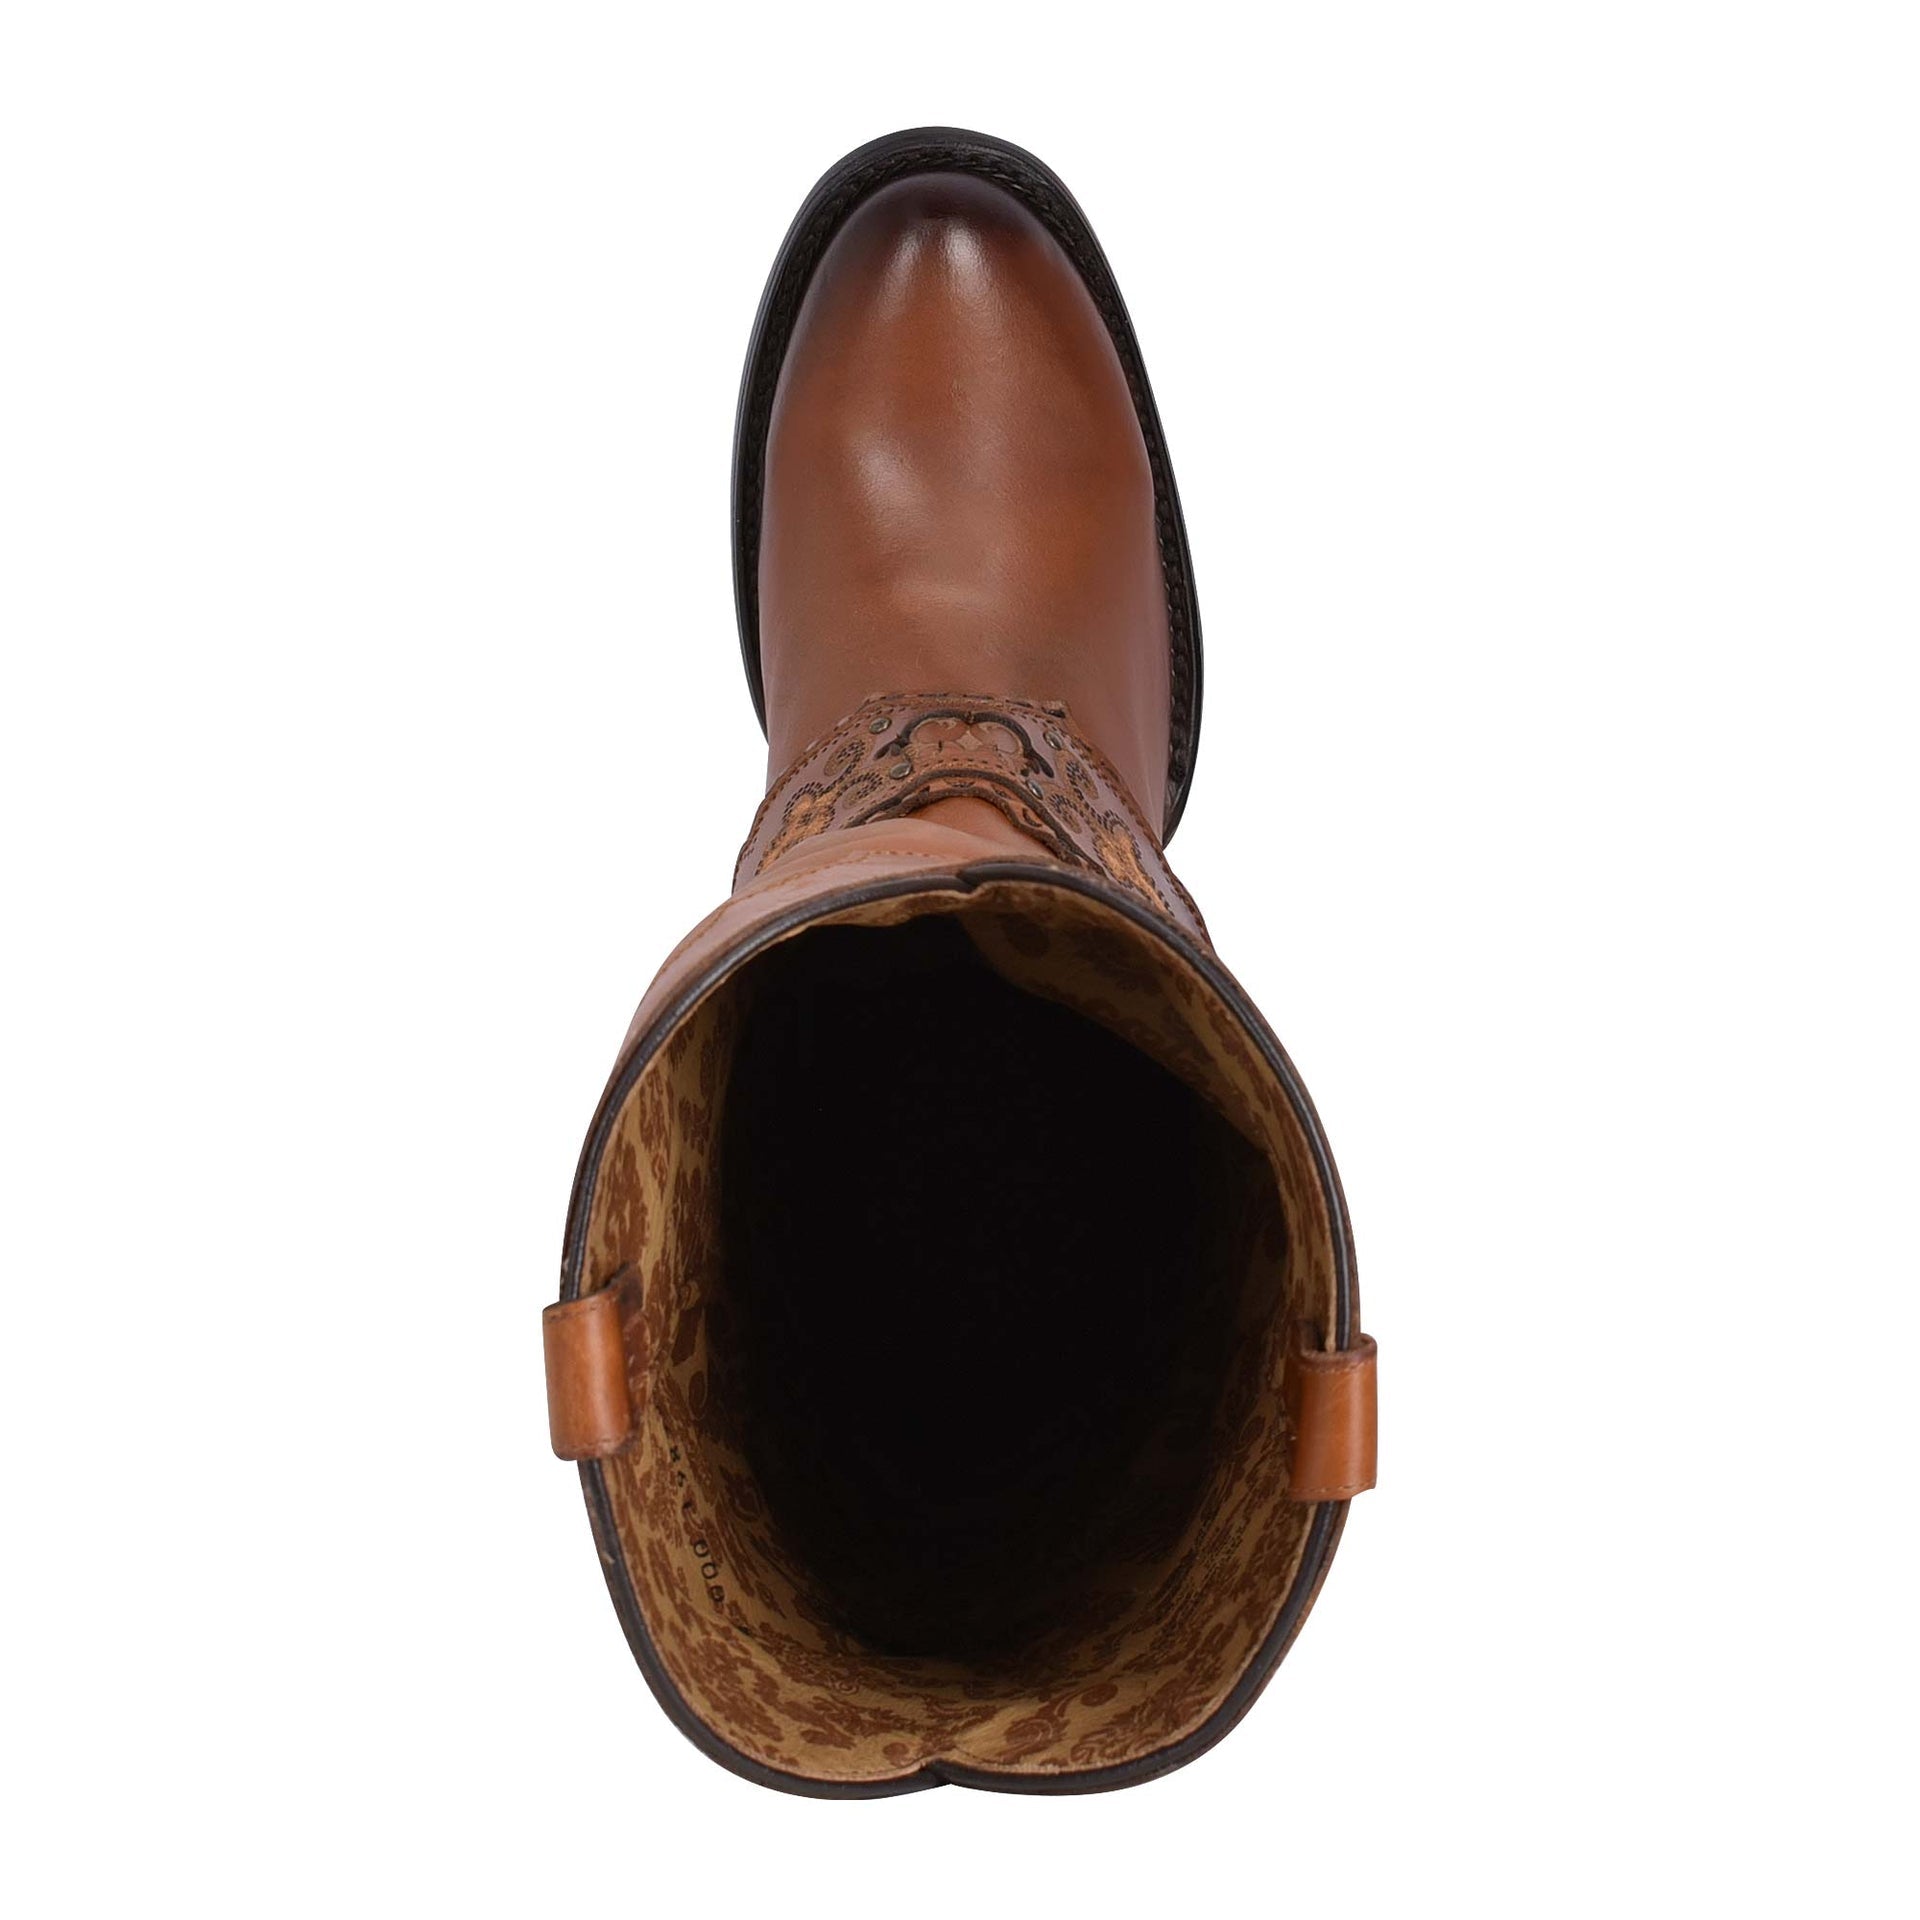 1Z01RS - Cuadra golden casual fashion cowboy leather boots for women-CUADRA-Kuet-Cuadra-Boots